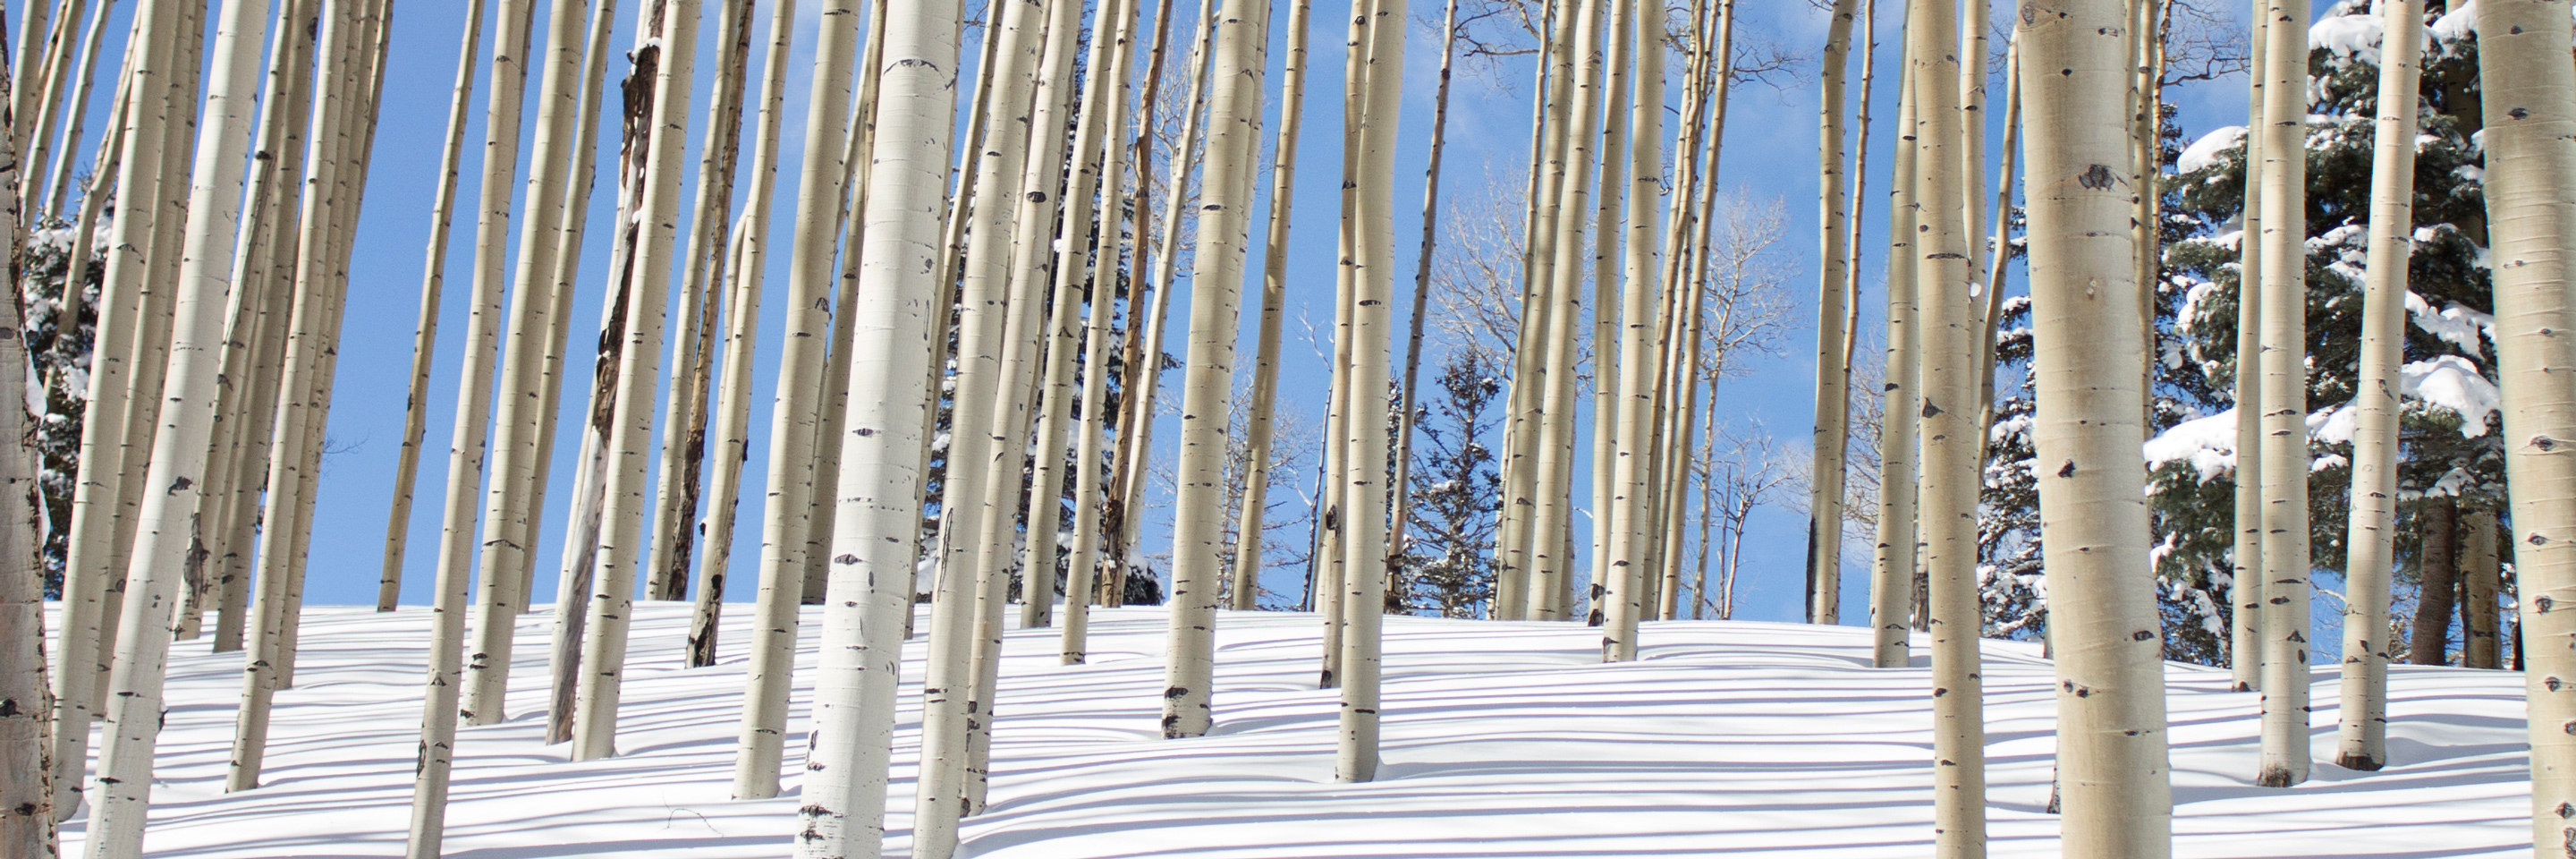 aspen trees in snow